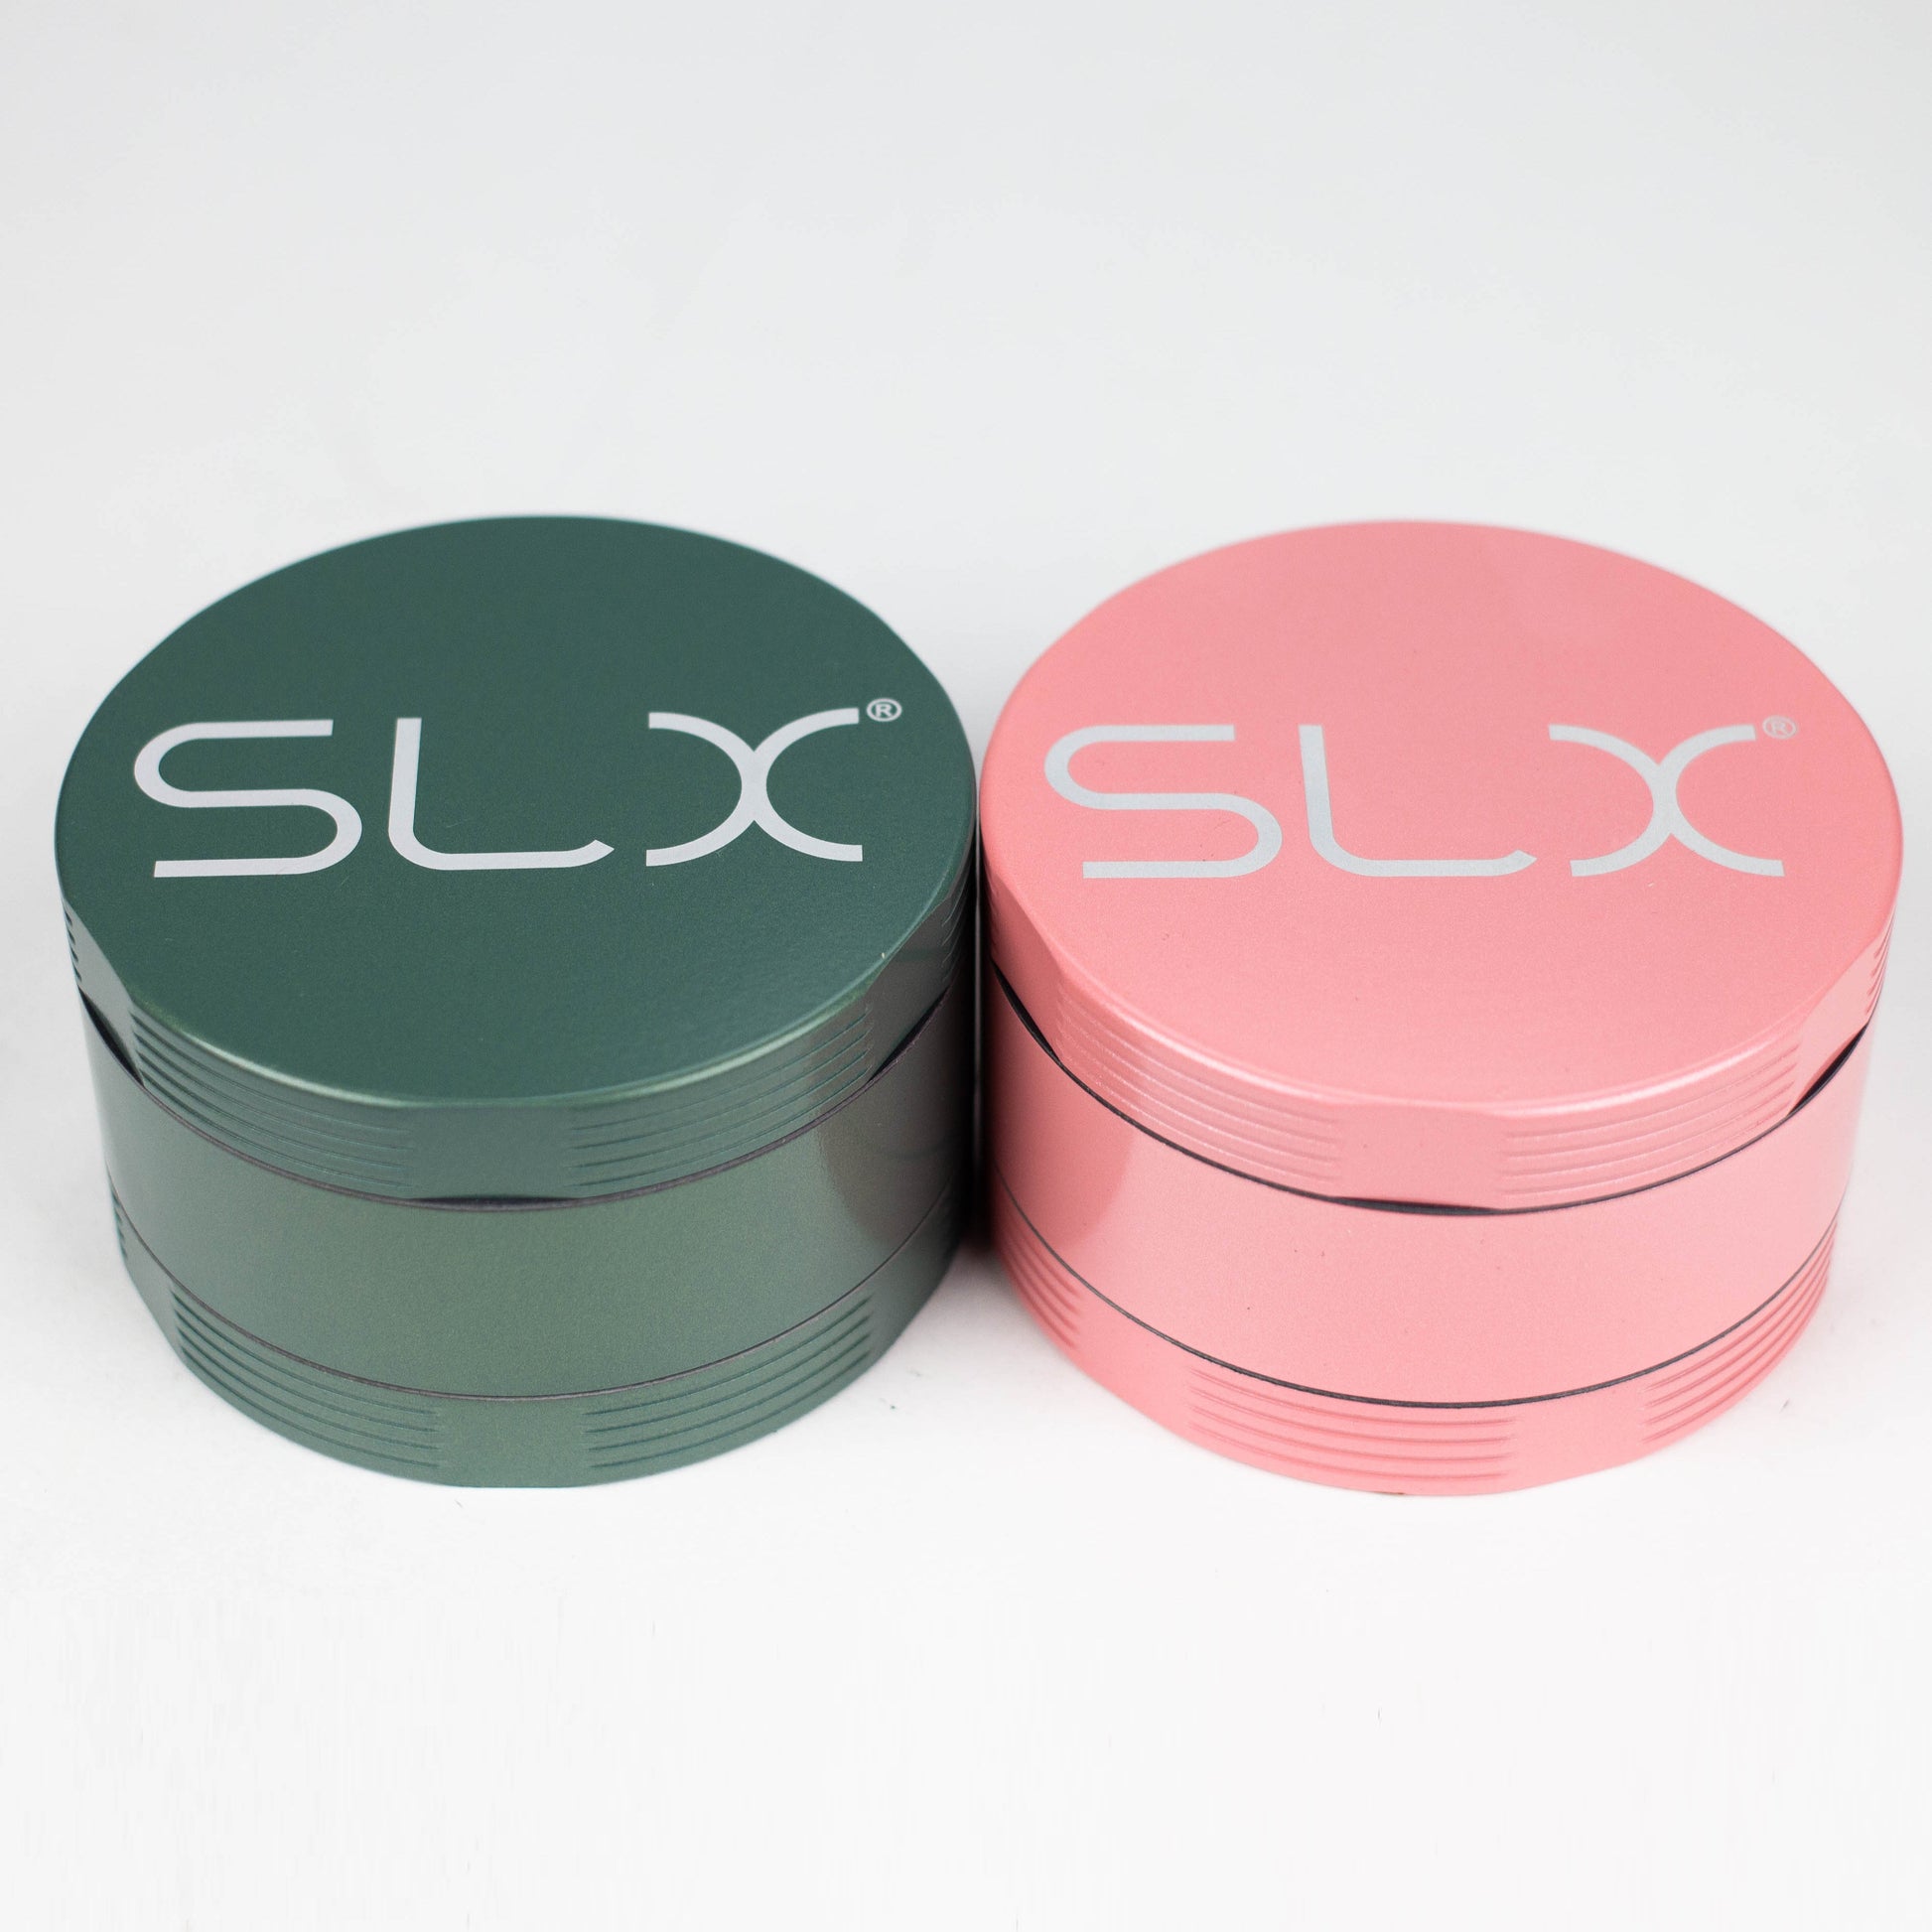 SLX | 88mm Ceramic coated Grinder Extra Large BFG_2